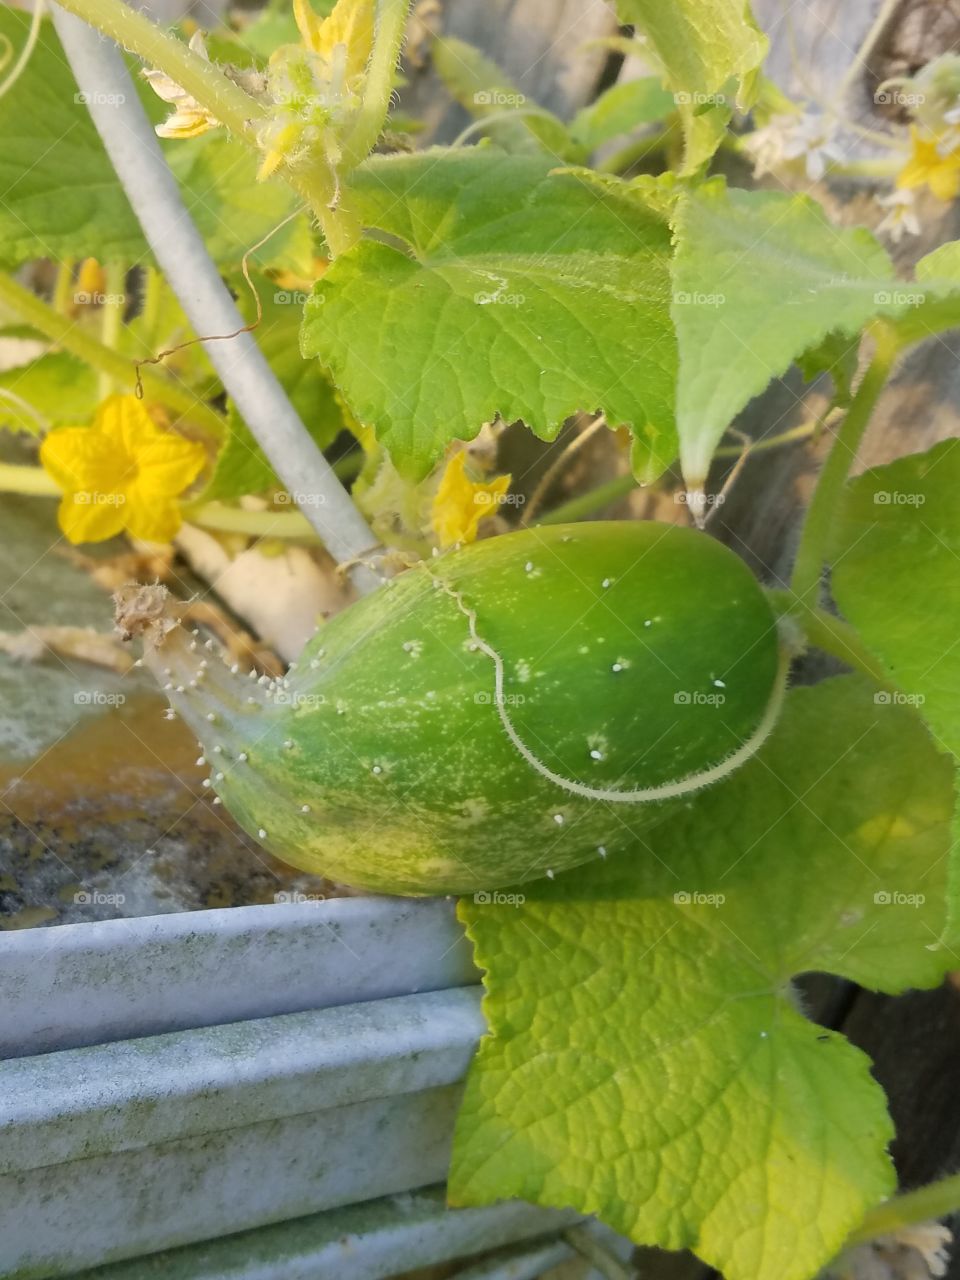 growing cucumber